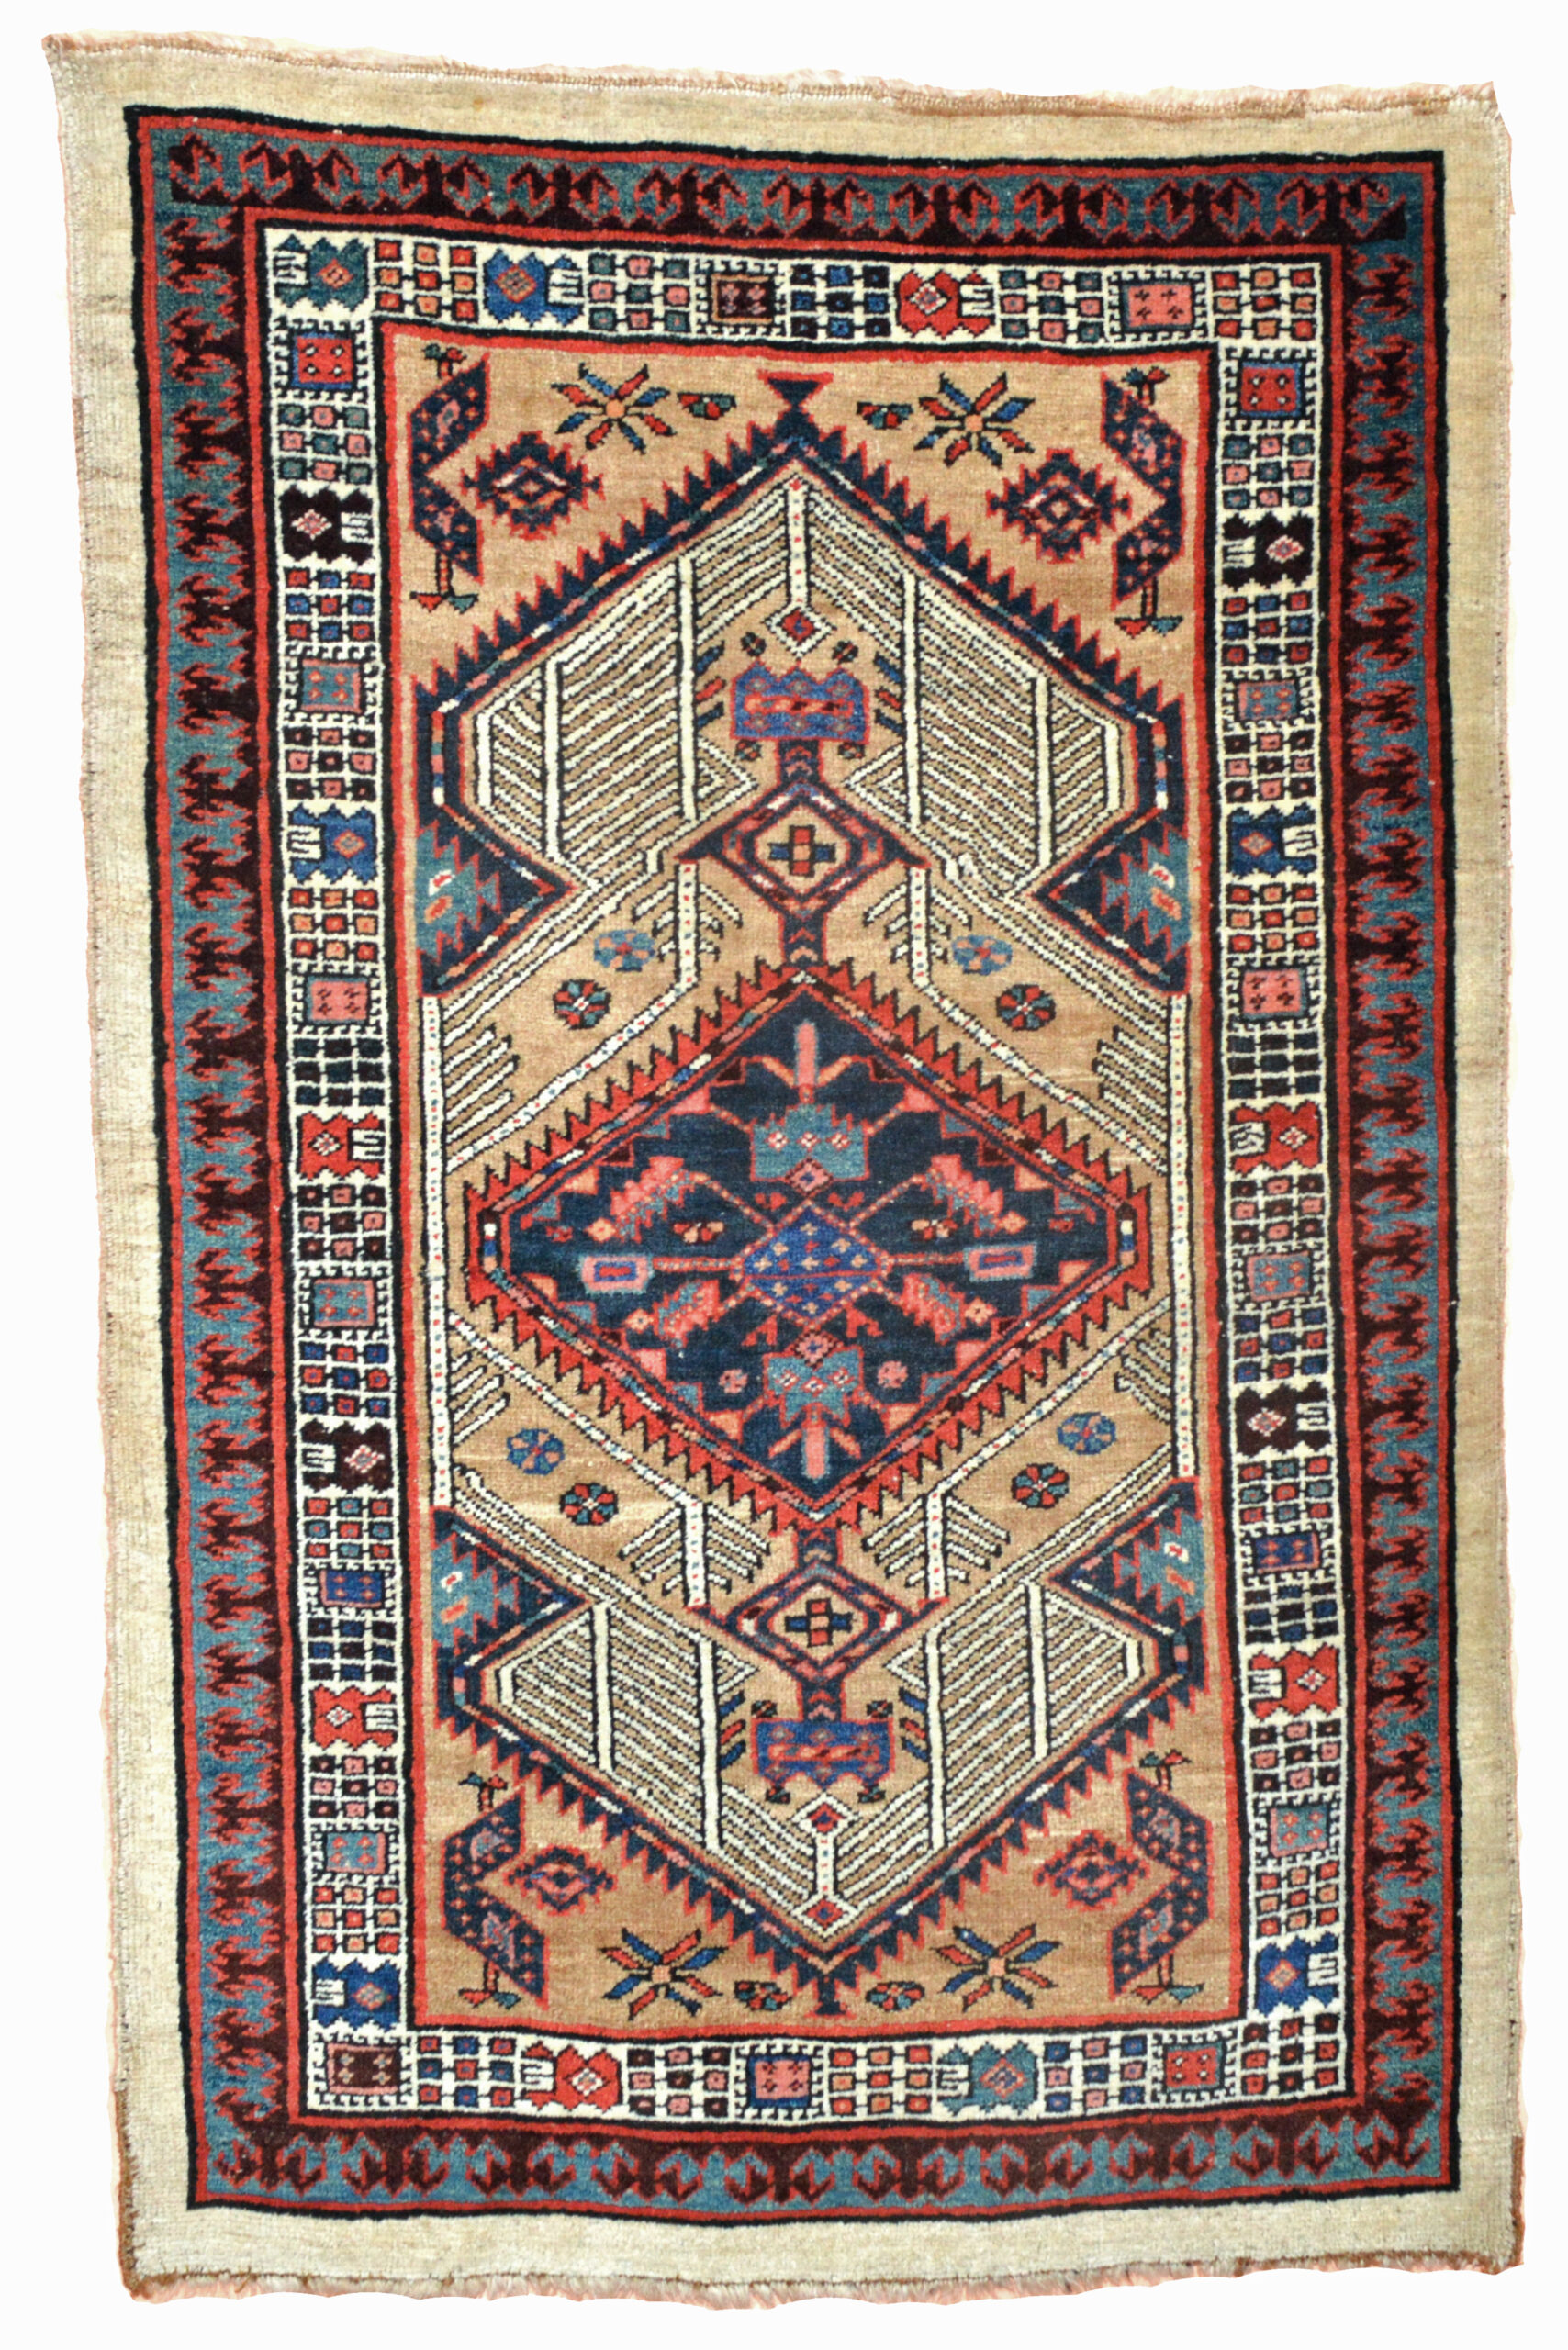 Antique Persian Serab rug, Douglas Stock Gallery, antique Oriental rugs Boston,MA area